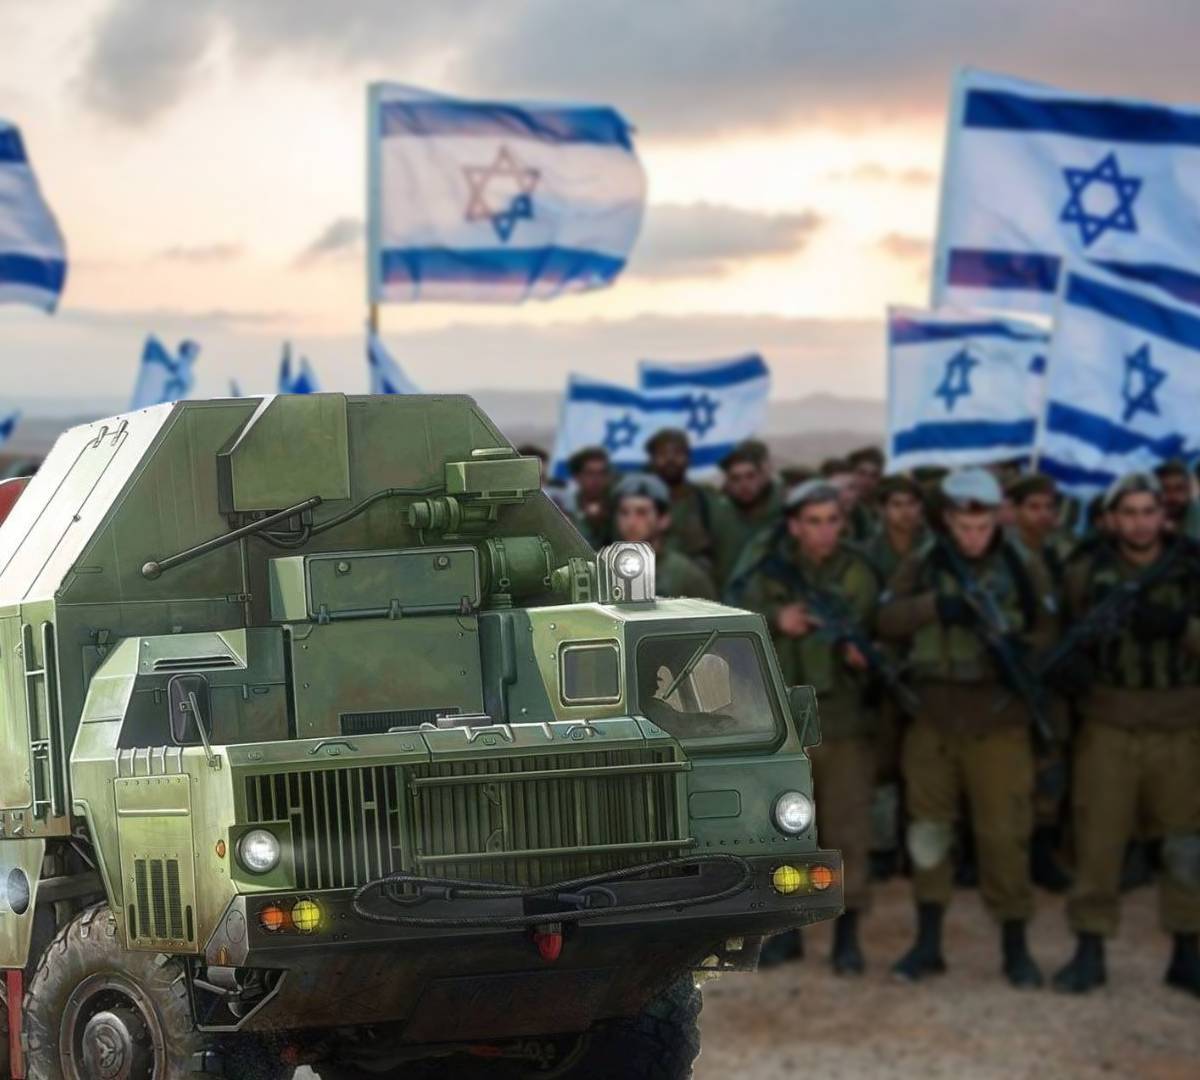 Закат вооруженных сил Израиля?